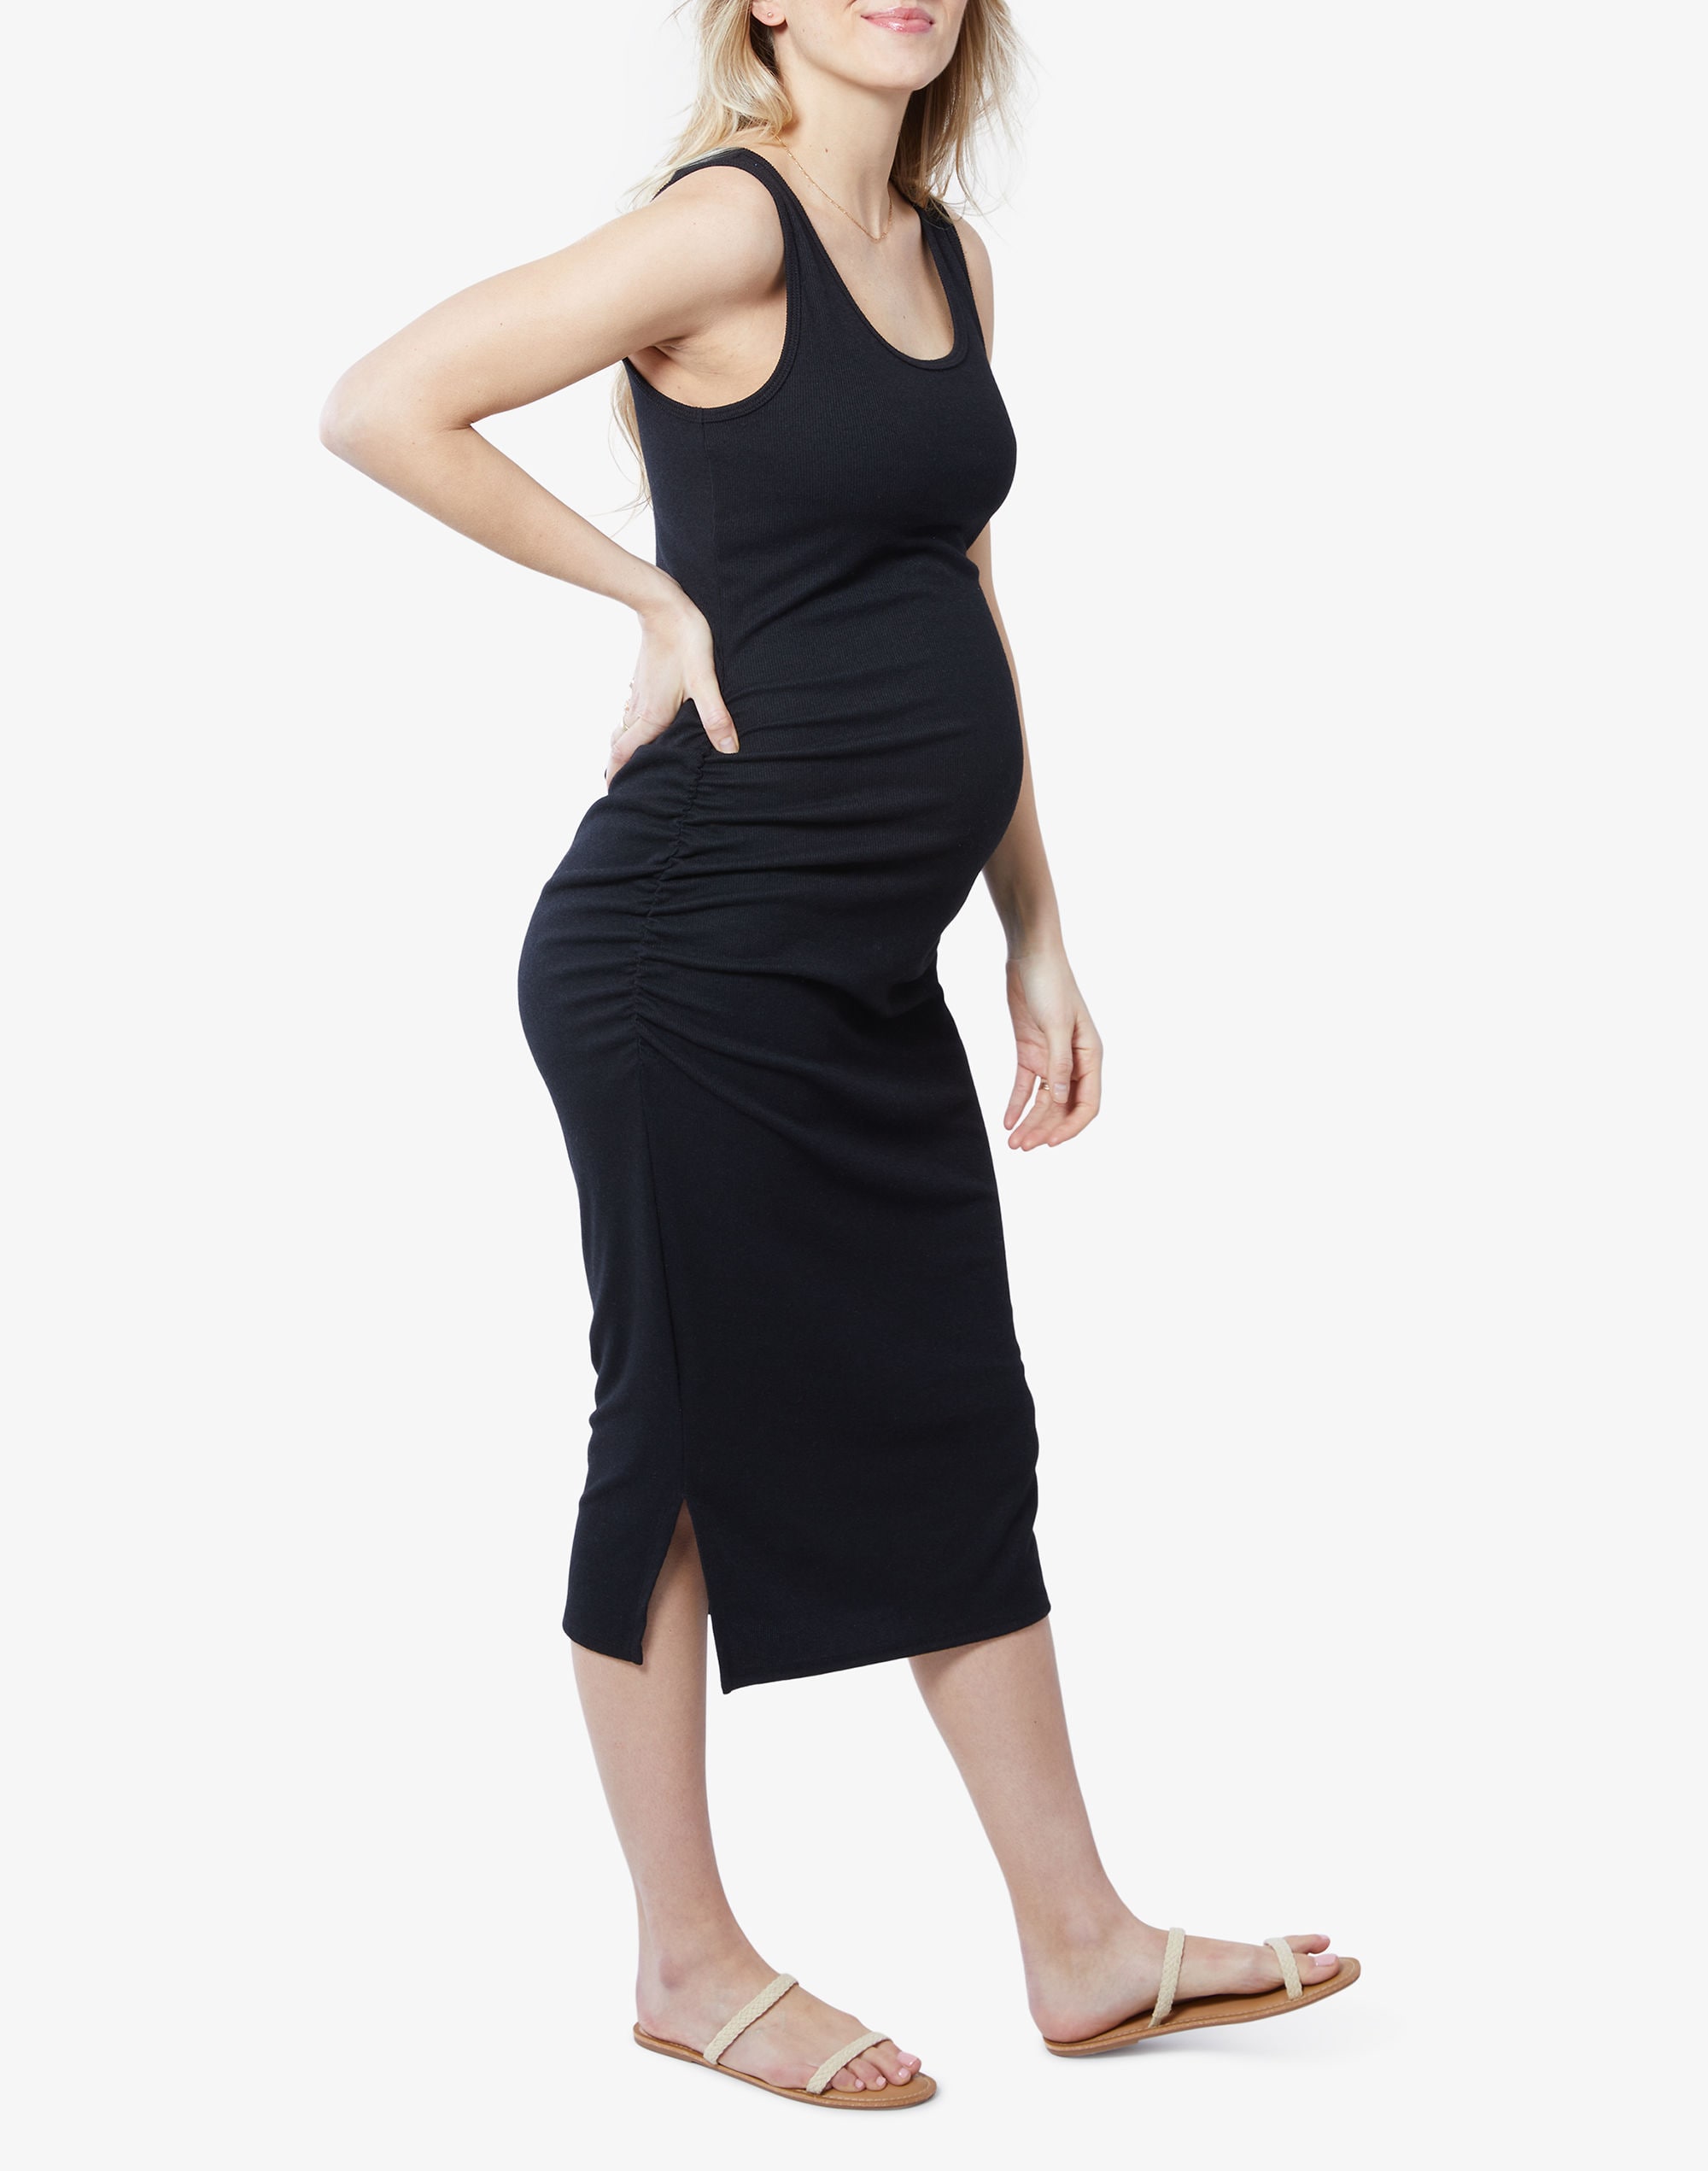 Ingrid & EveryWear Ribbed Maternity Top Dress